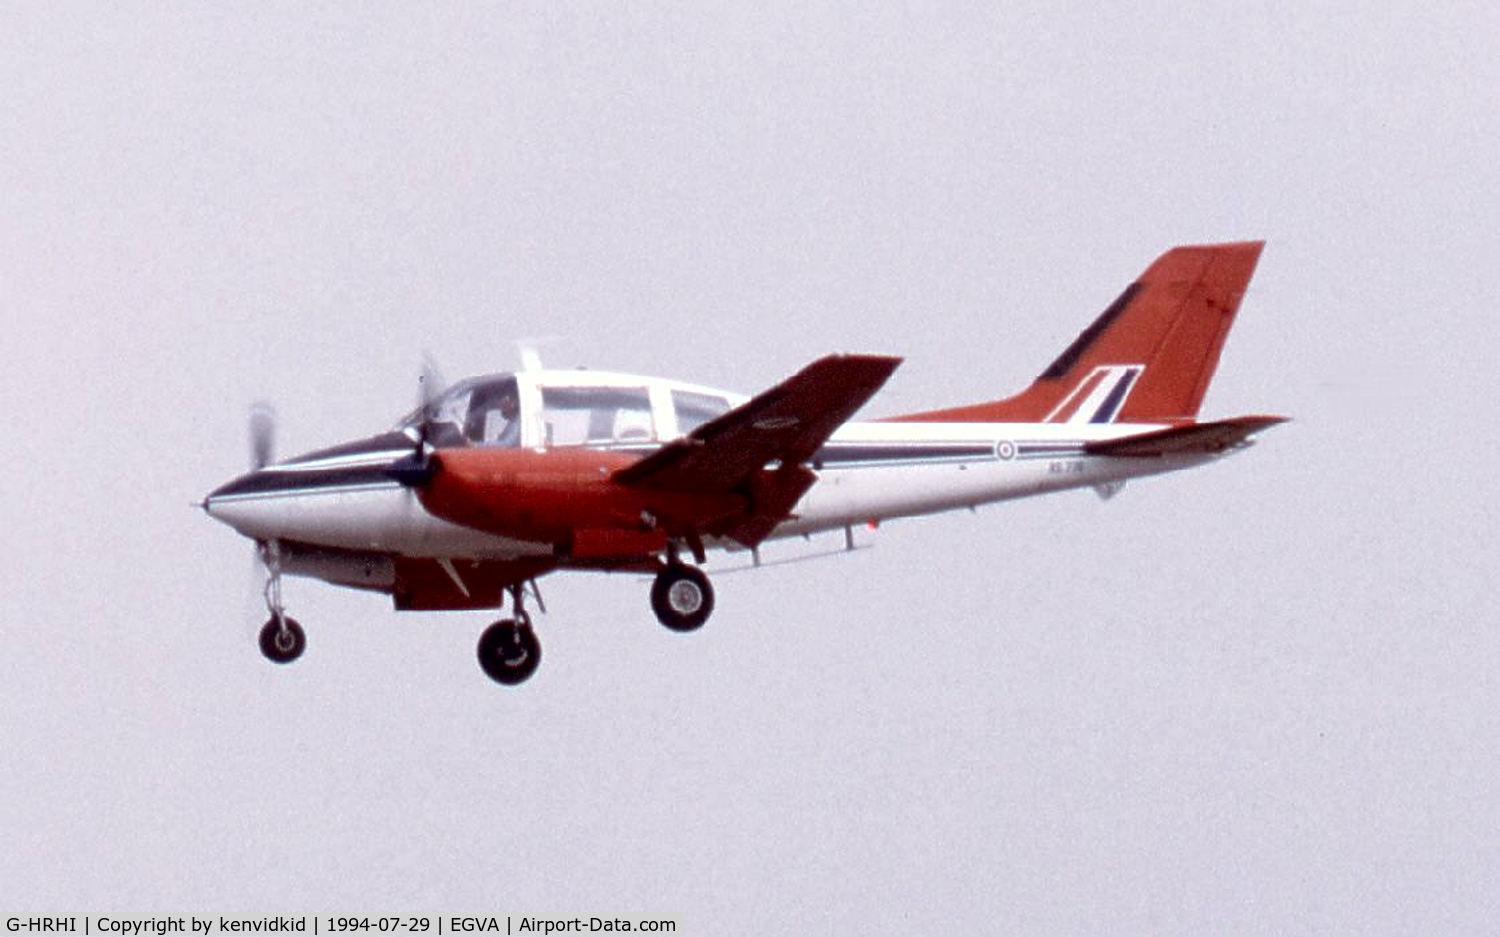 G-HRHI, 1965 Beagle B-206R Basset CC.1 C/N B014, G-HRHI arriving at RIAT.